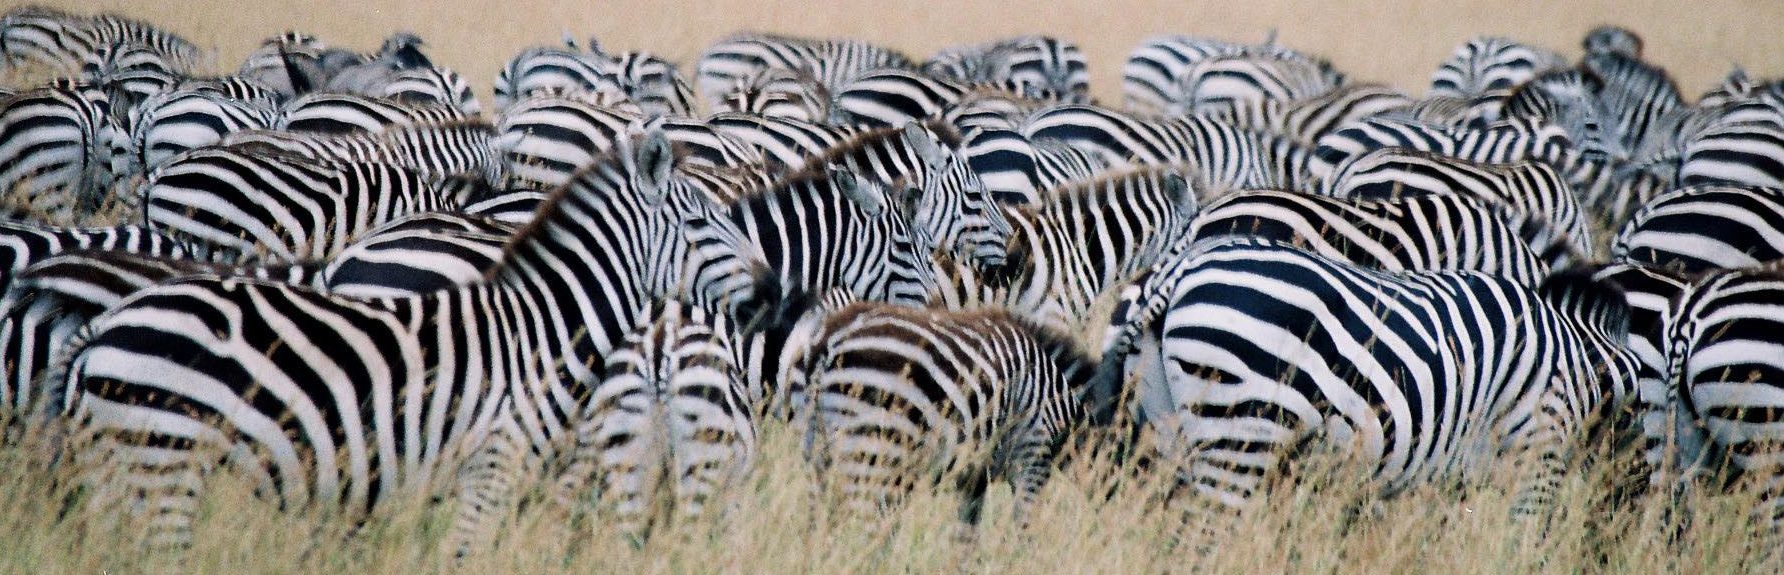 Zebras Dazzle and Innovate